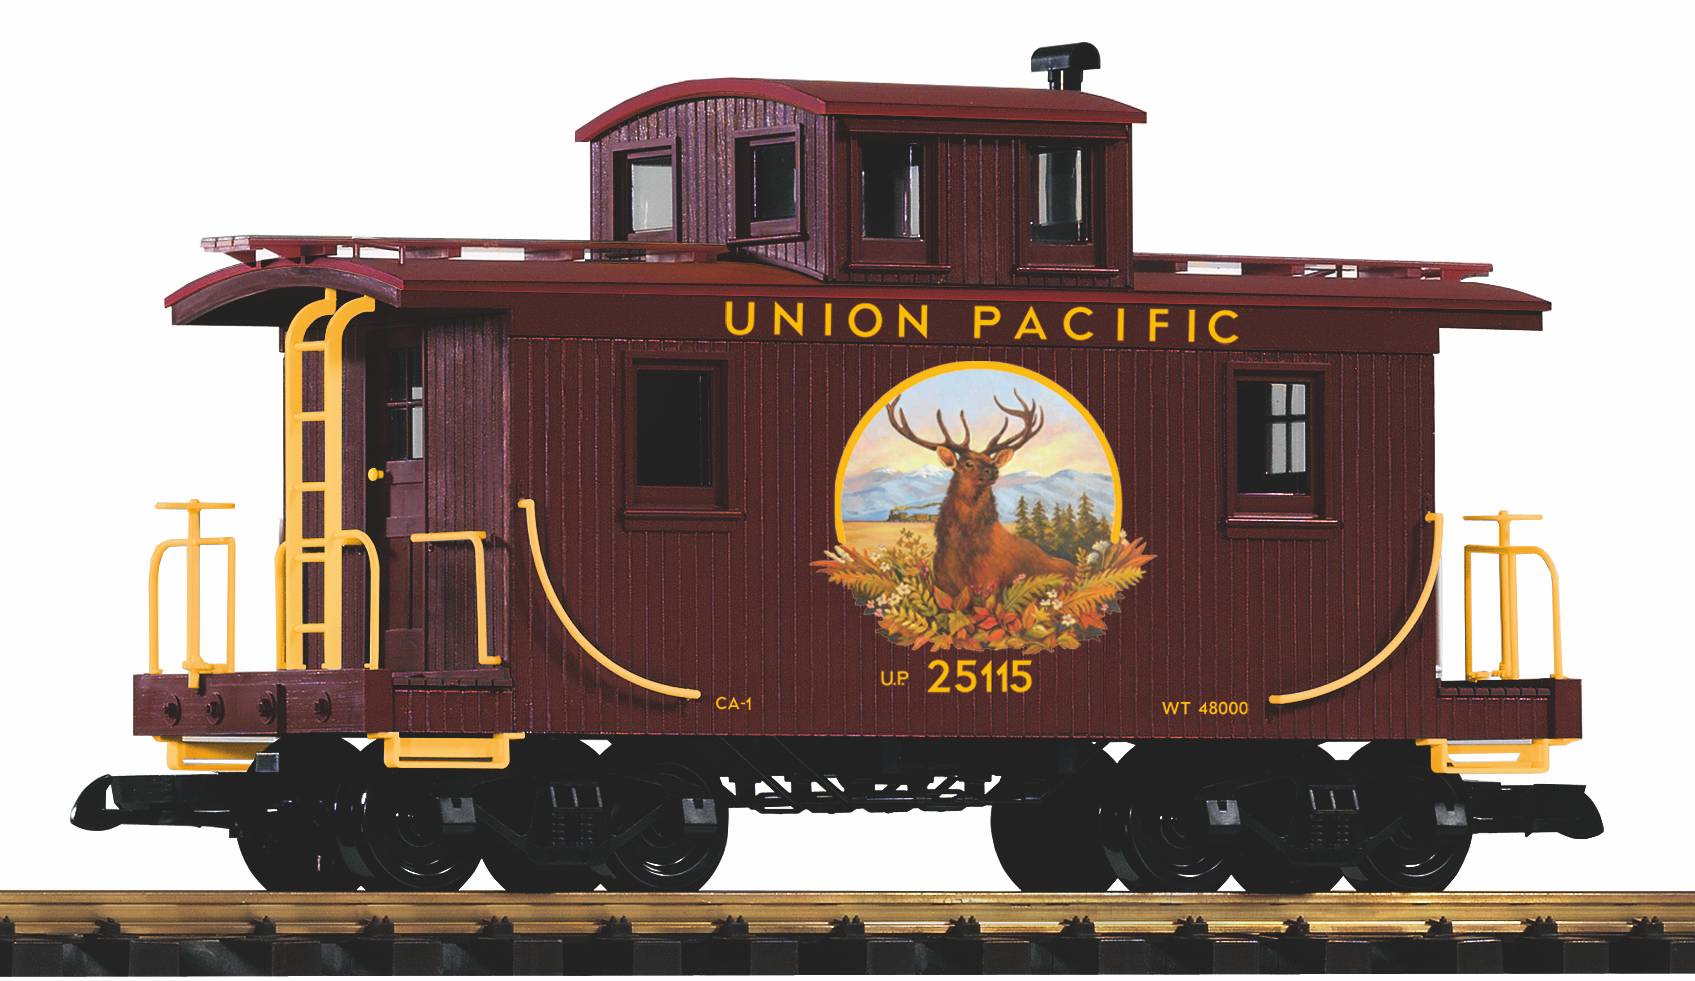 PIKO Art. Nr. 38948 - G Güterzugbegleitwagen, UP - Union Pacific Nr. 25115